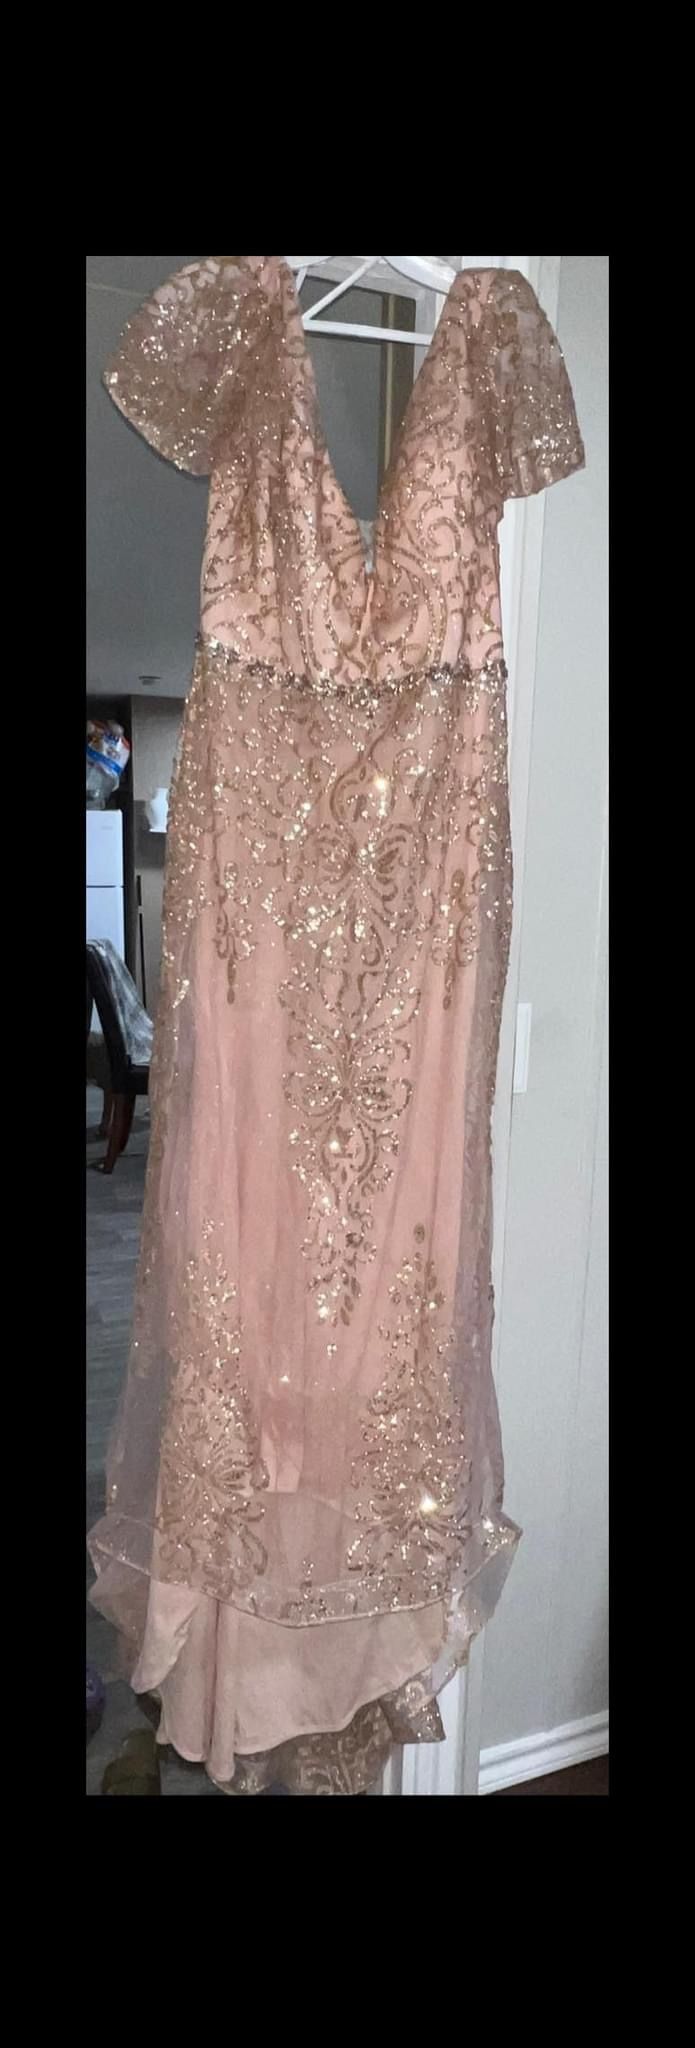 Rose Gold Dress